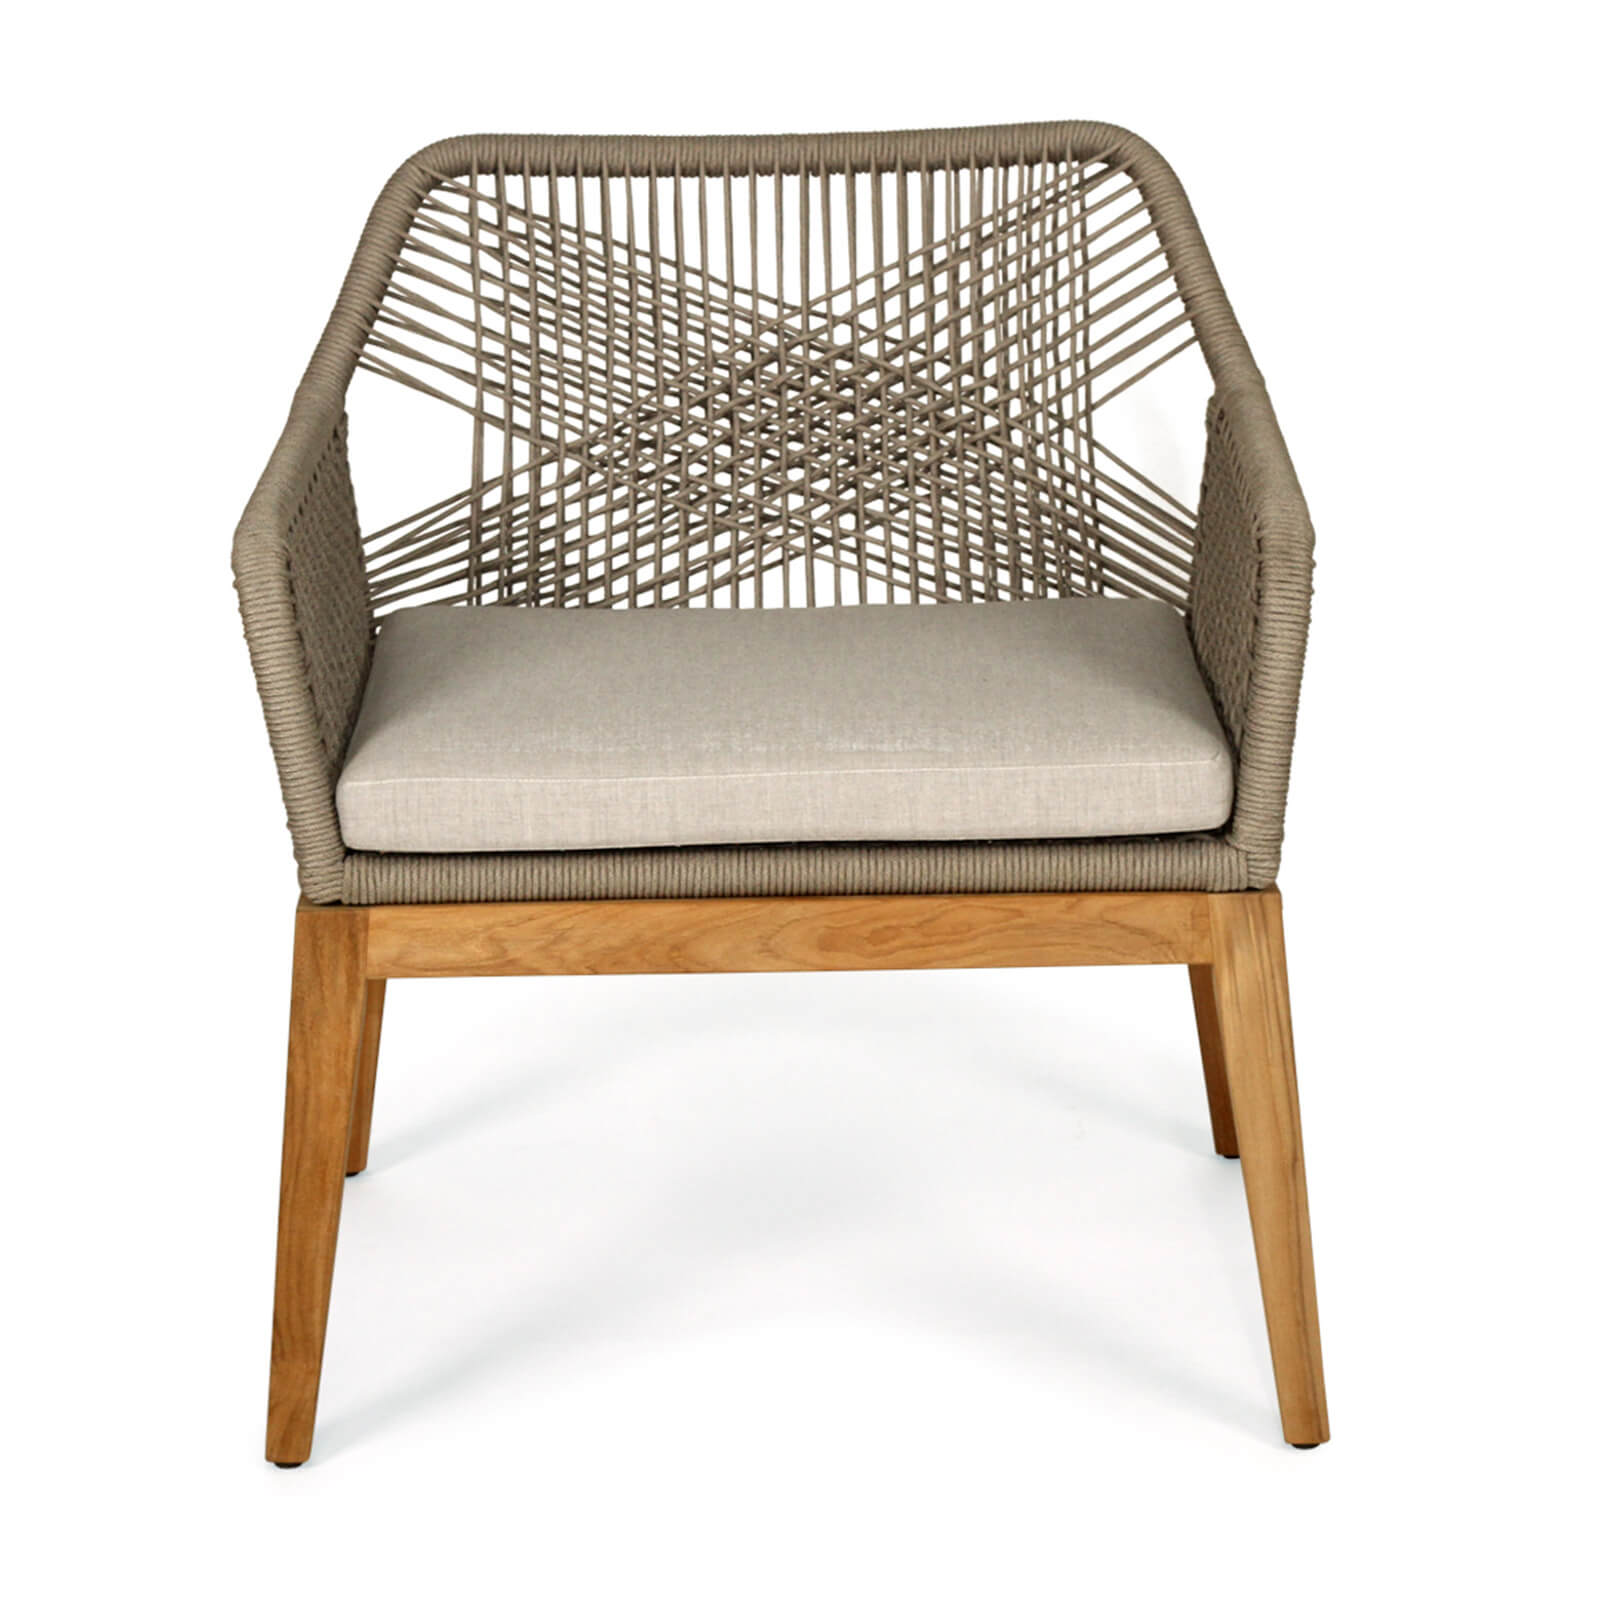 Bedarra | Natural, Coastal, Wooden Indoor Outdoor Dining Chair | Natural